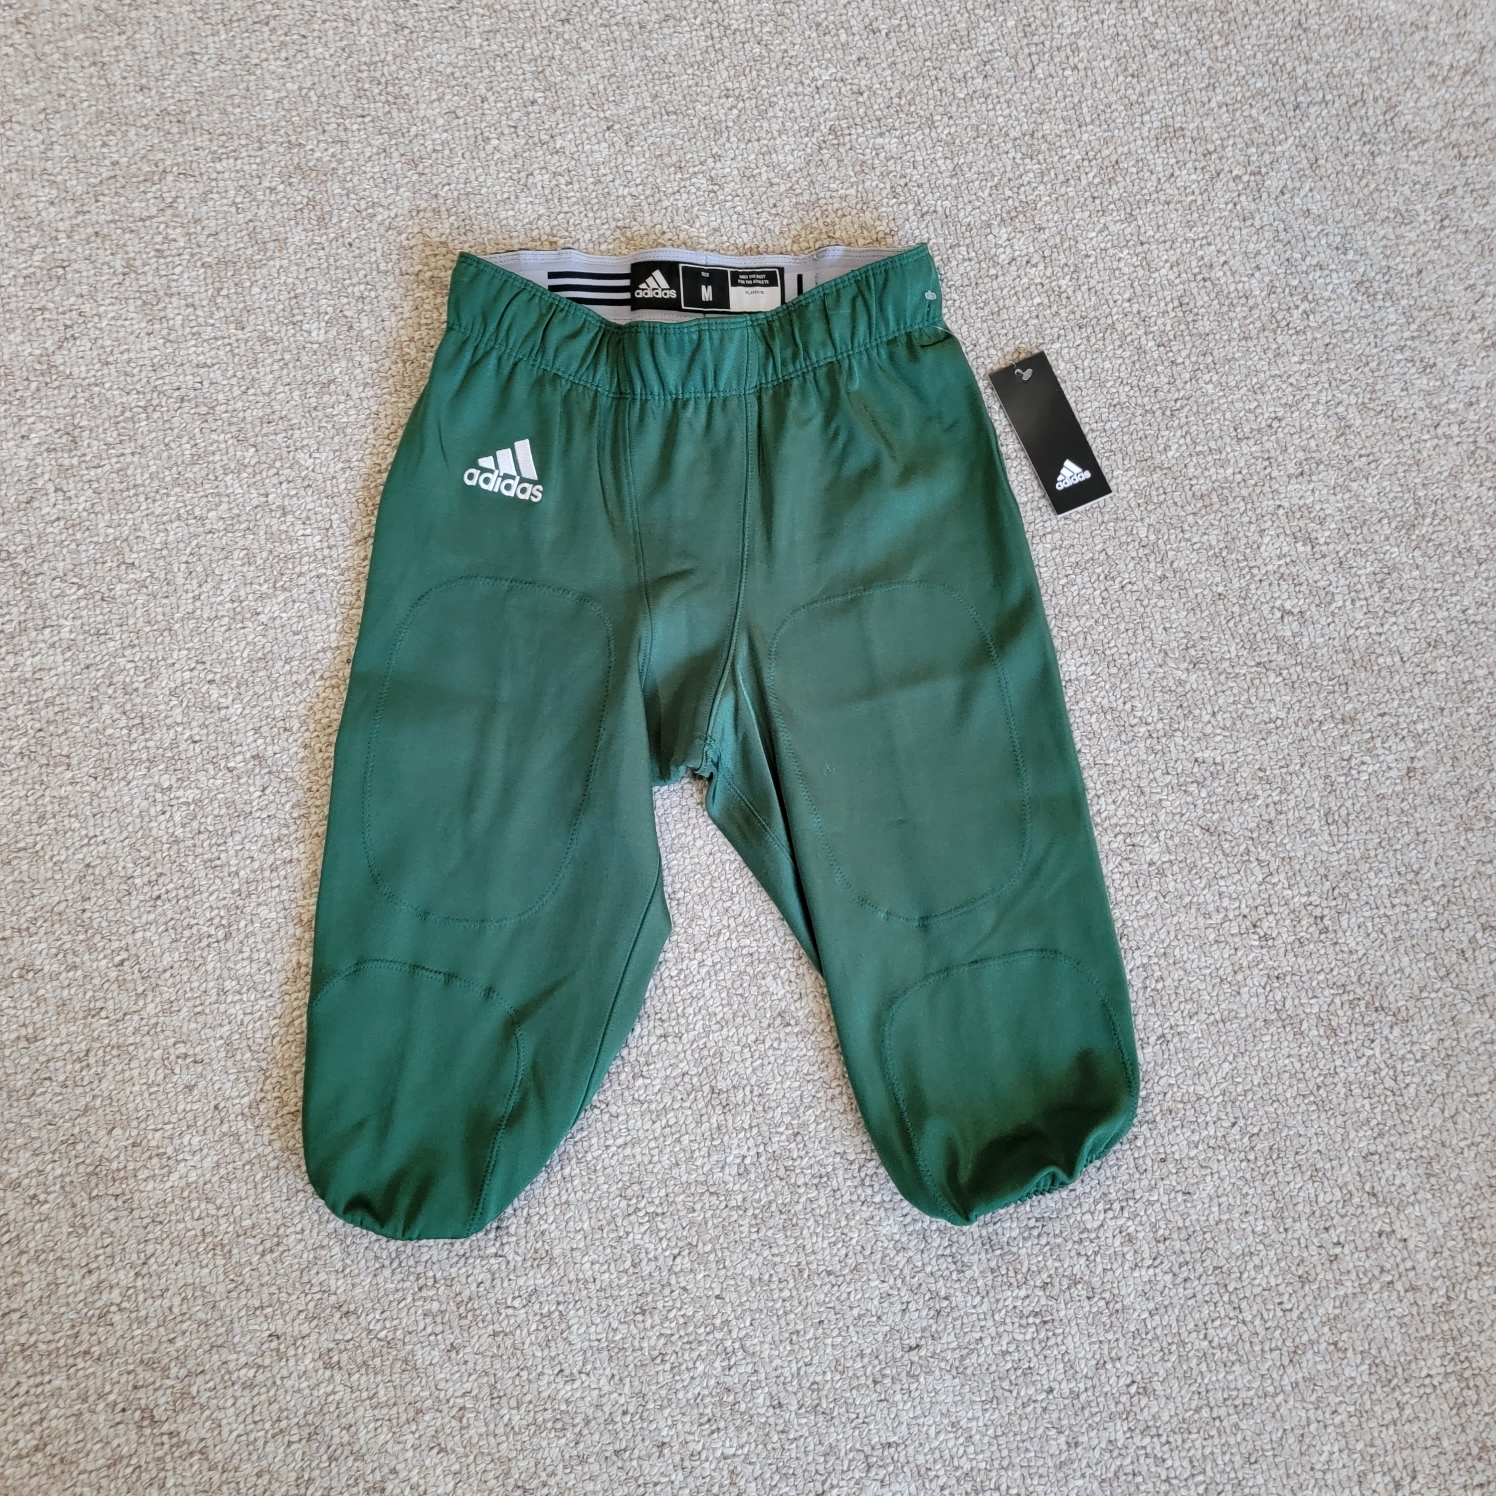 NWT Adidas Dark Green Football Pants Size Medium